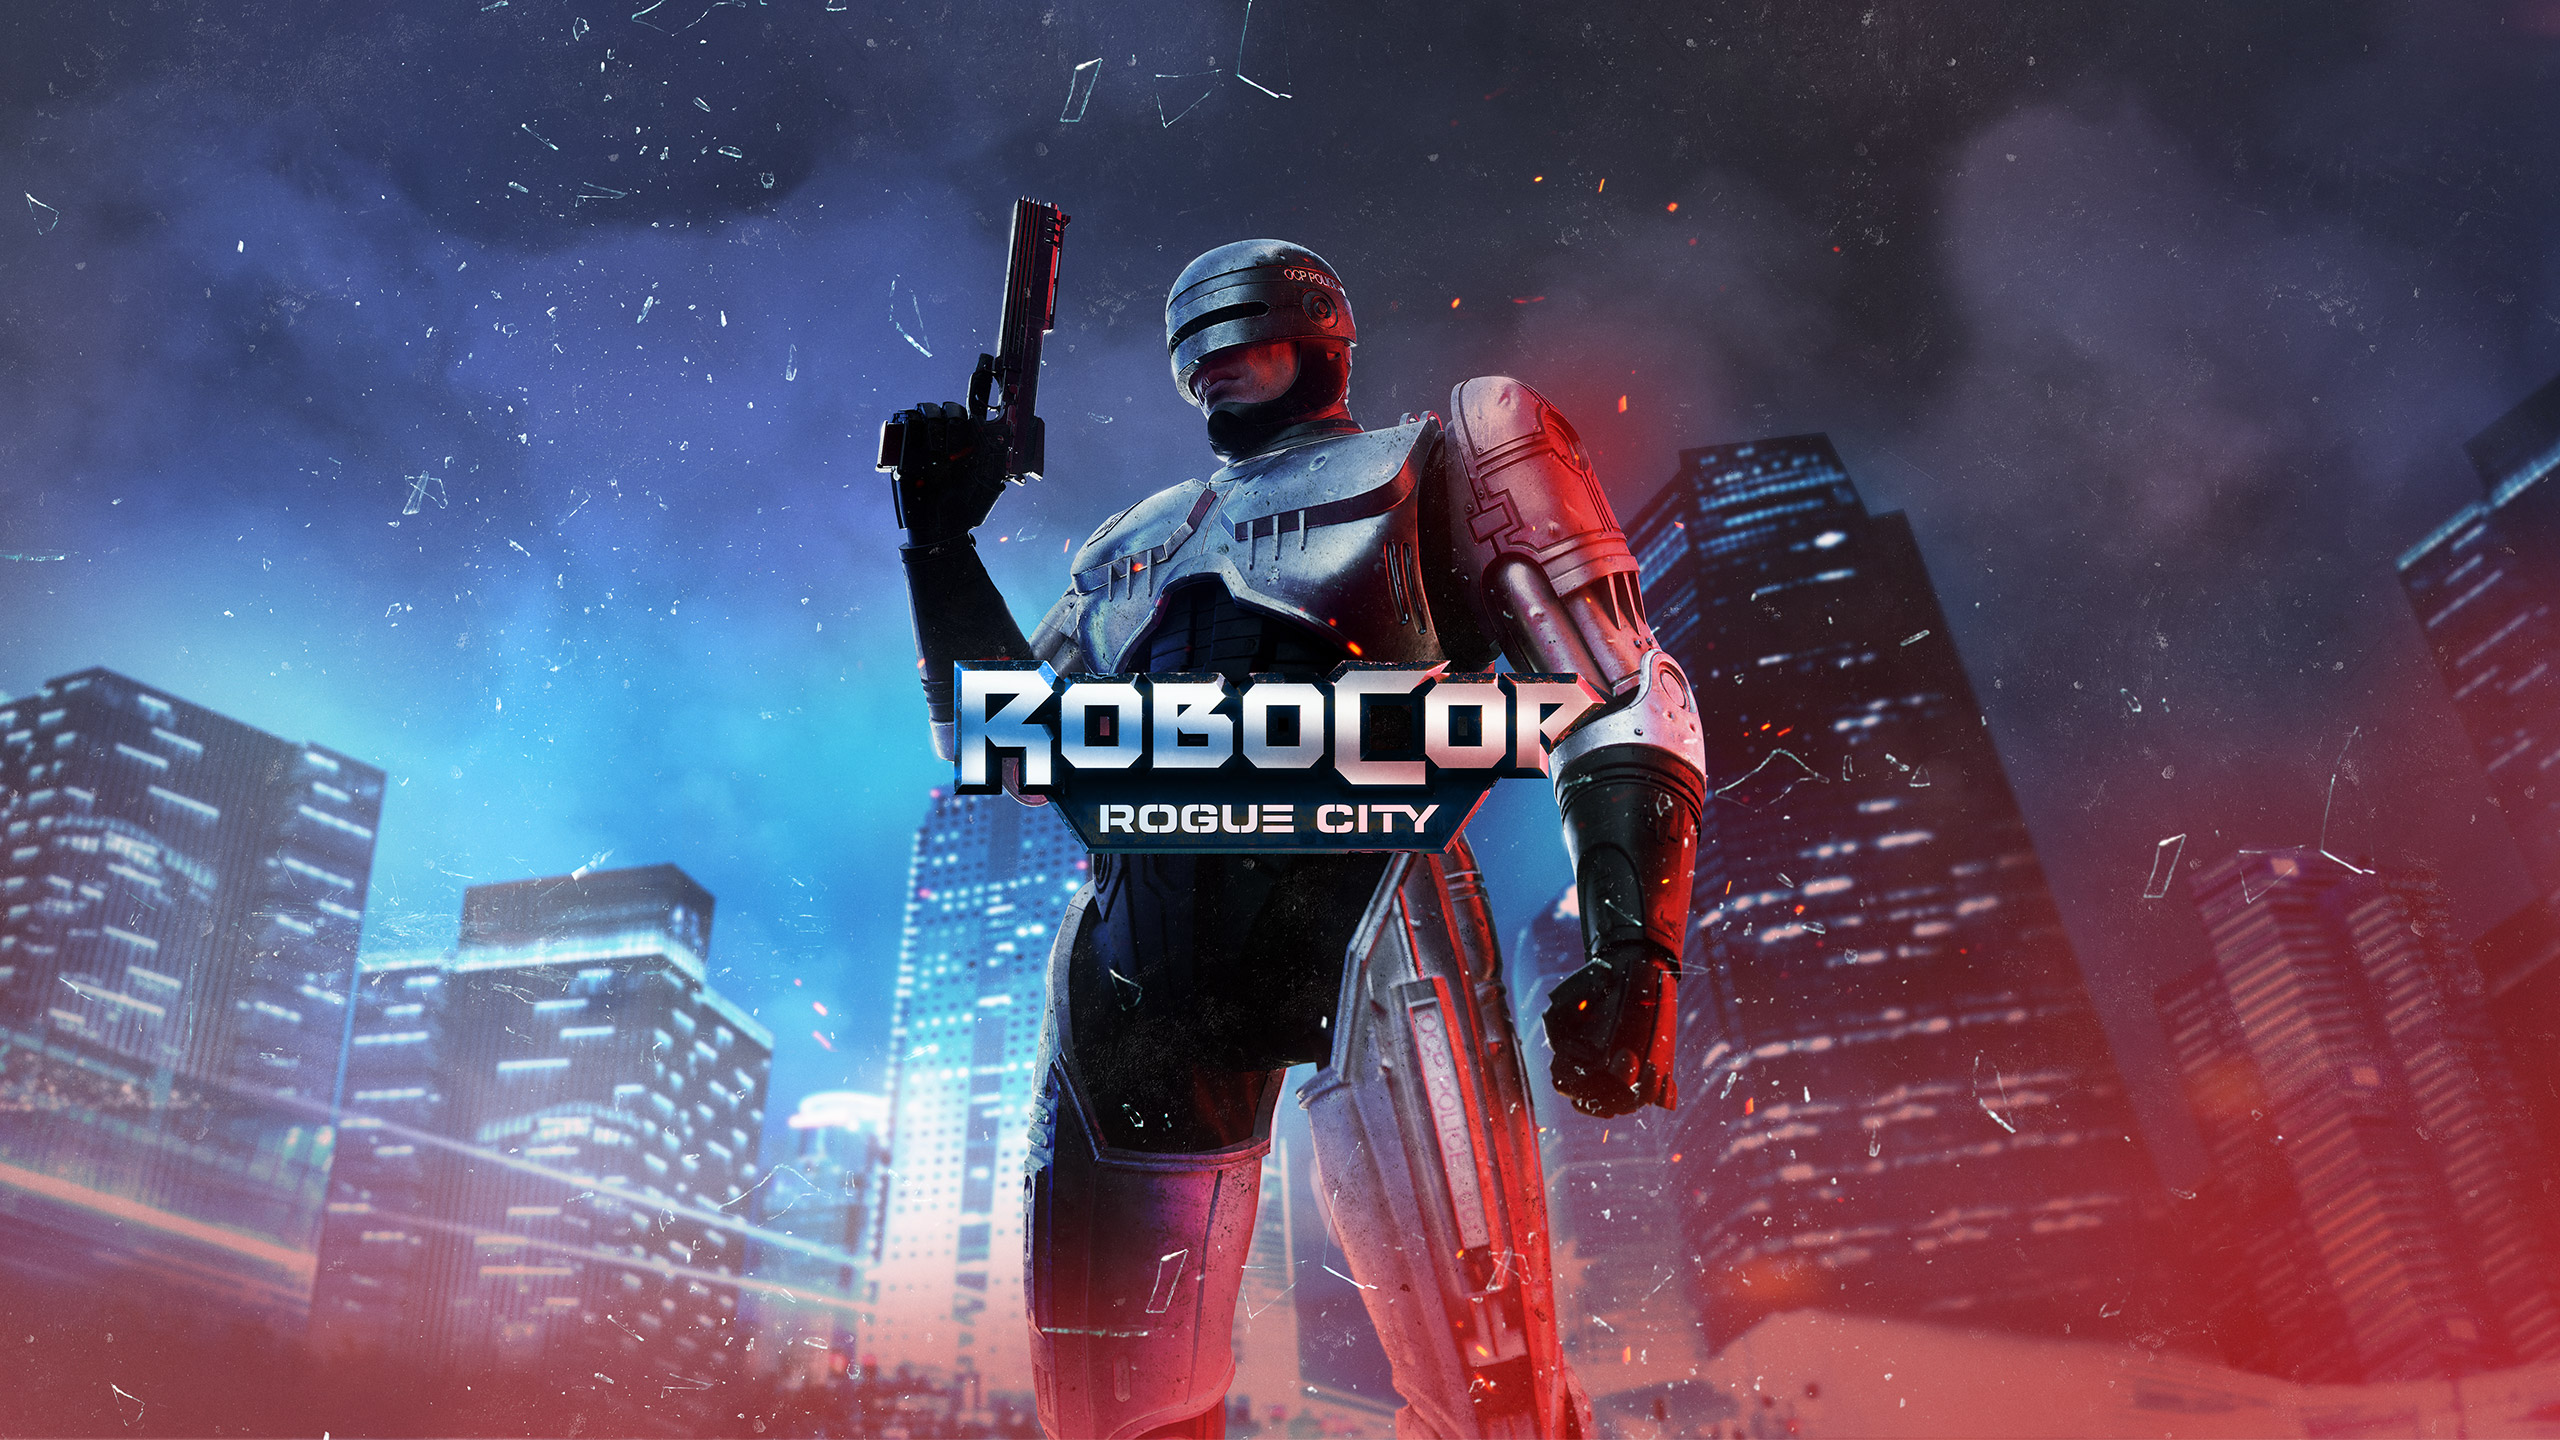 RoboCop Rogue City : découvrez son contenu exclusif en précommande !